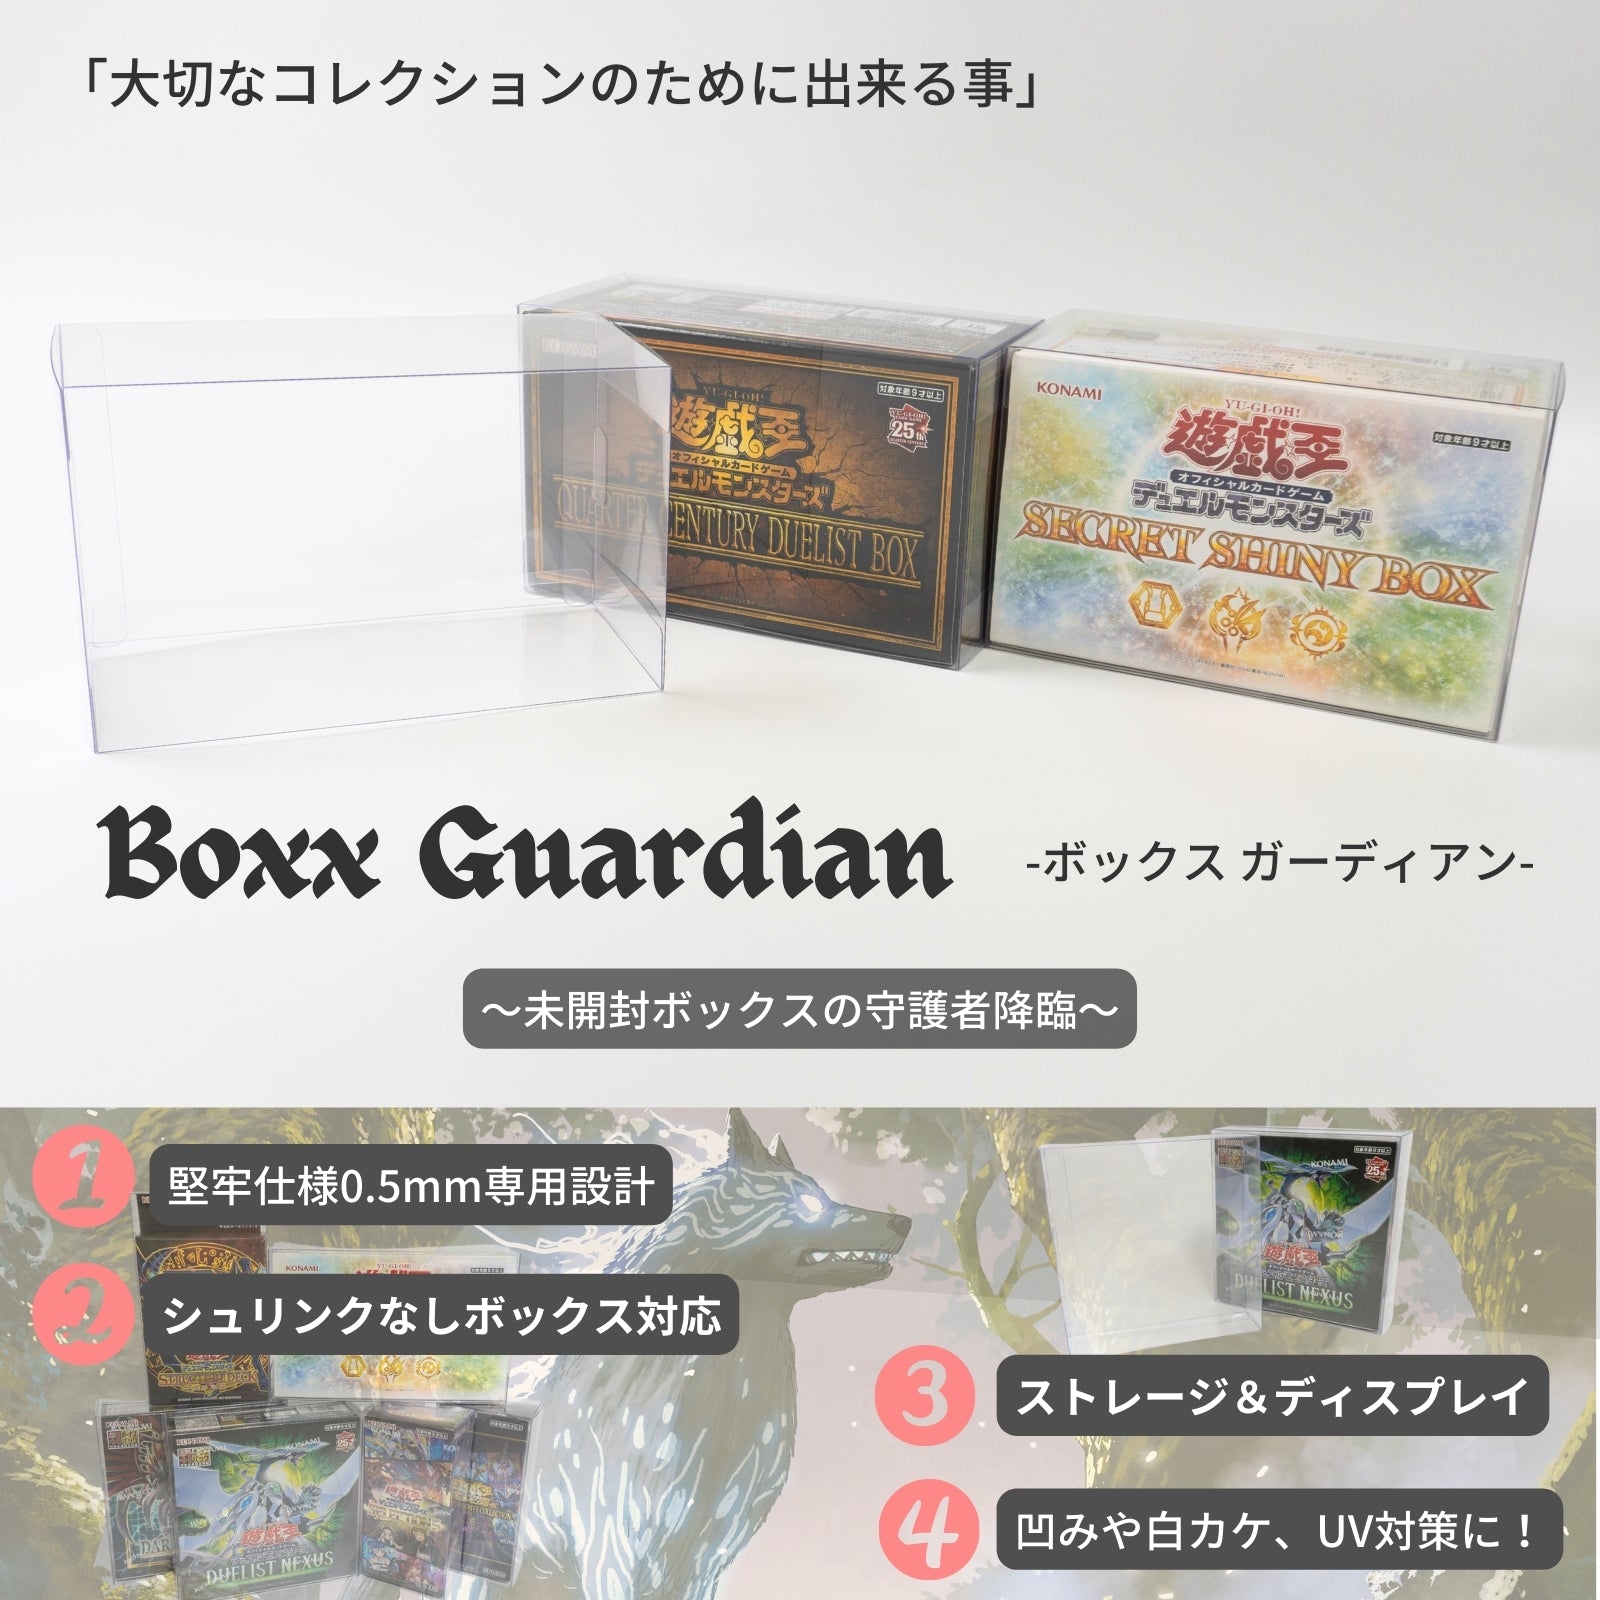 Boxx Guardian 遊戯王オフィシャルカードゲーム用 スペシャルセット サイズ